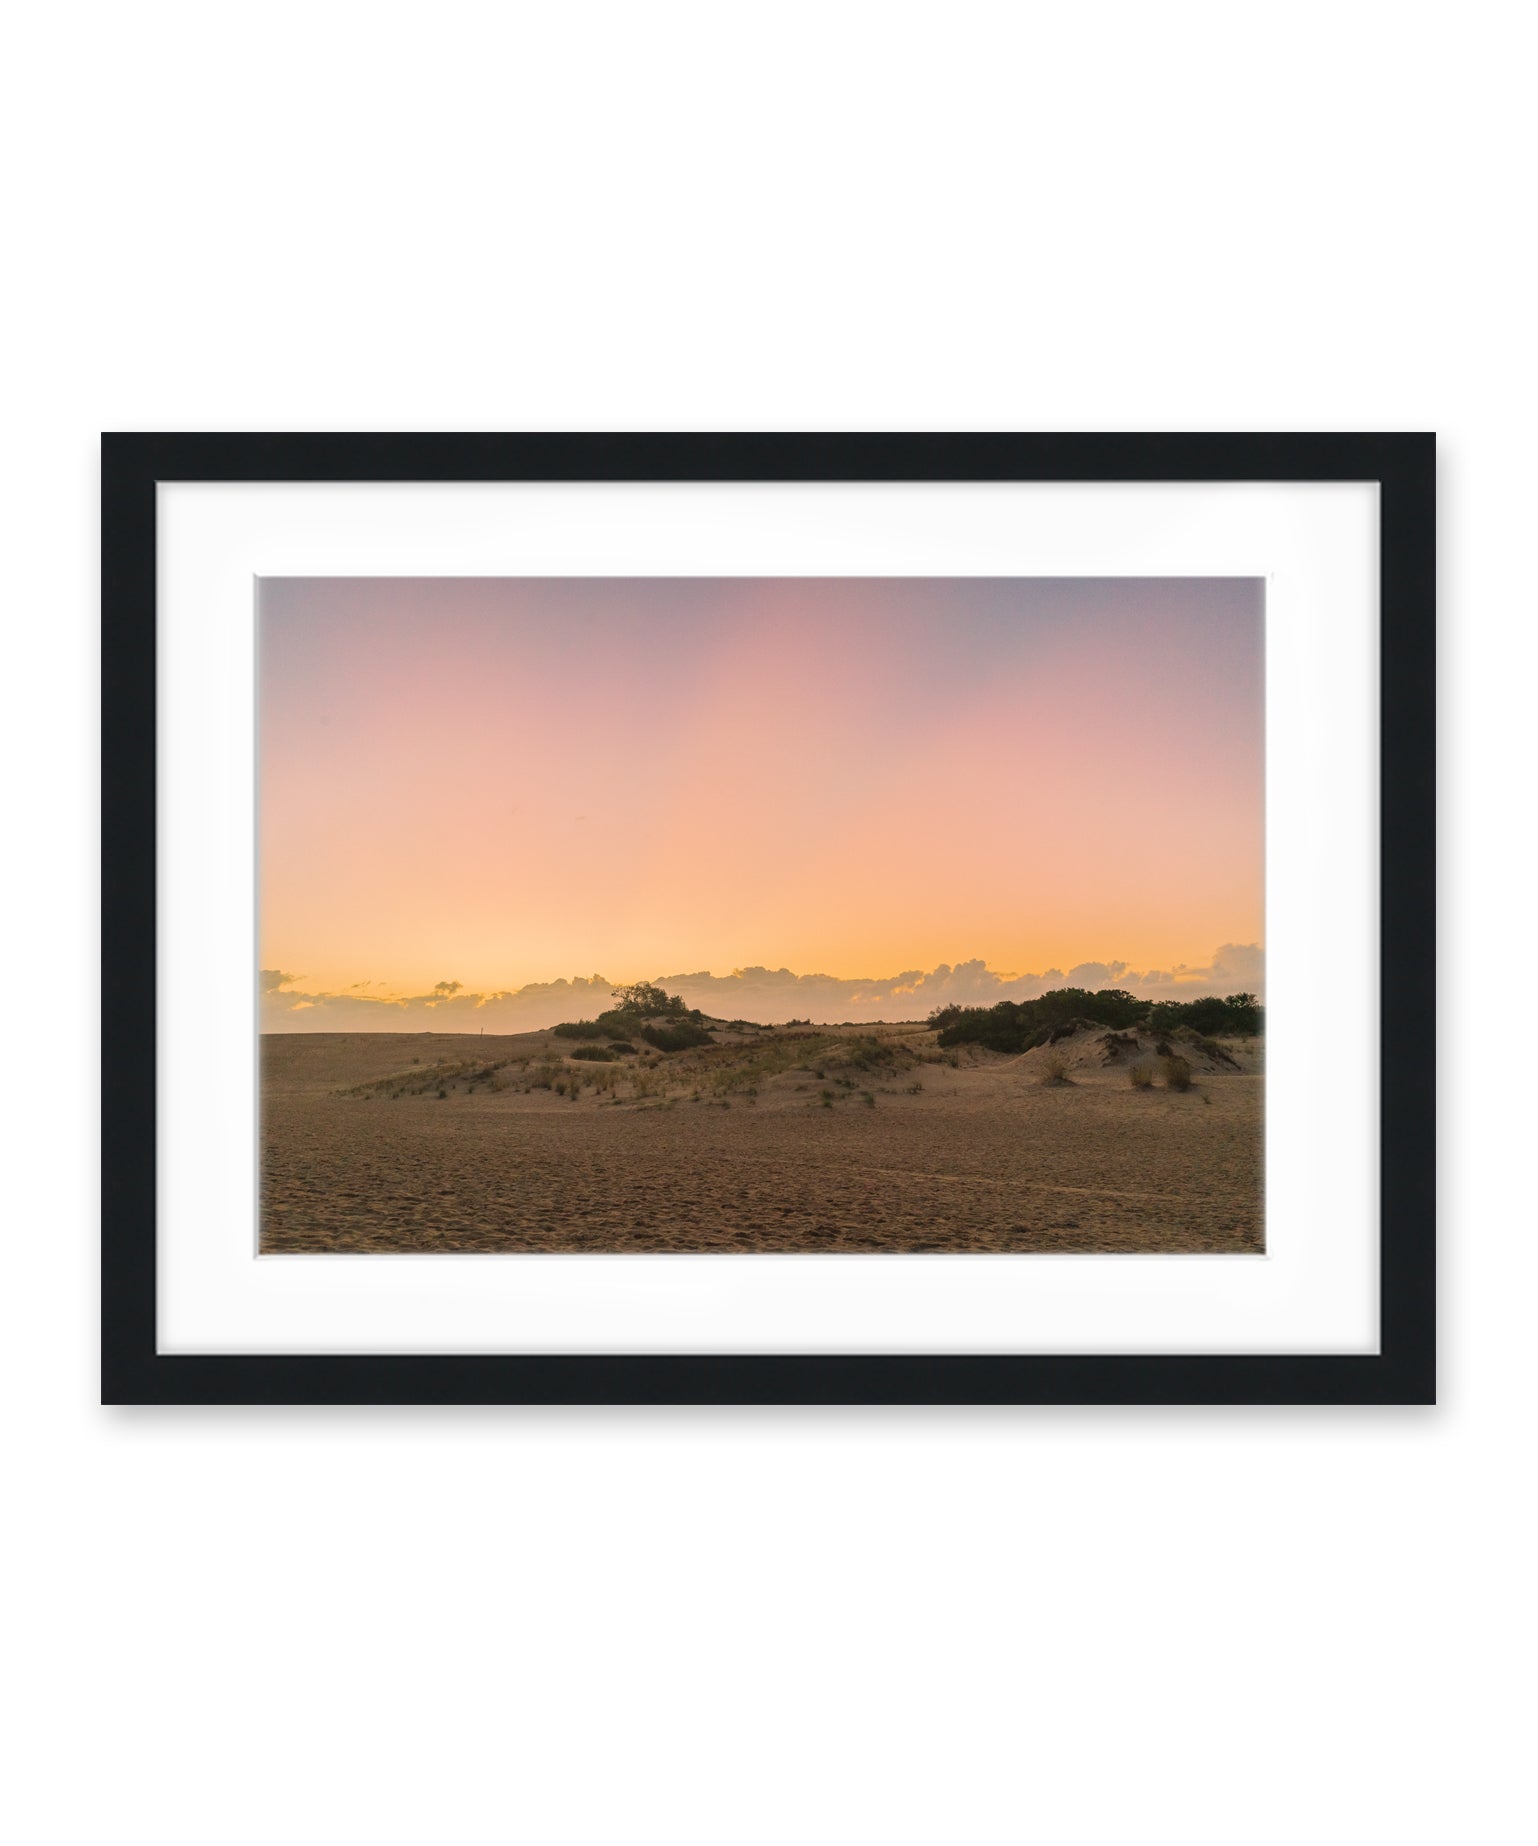 outer banks, jockeys ridge sunset dunes photograph by wright and roam, black frame